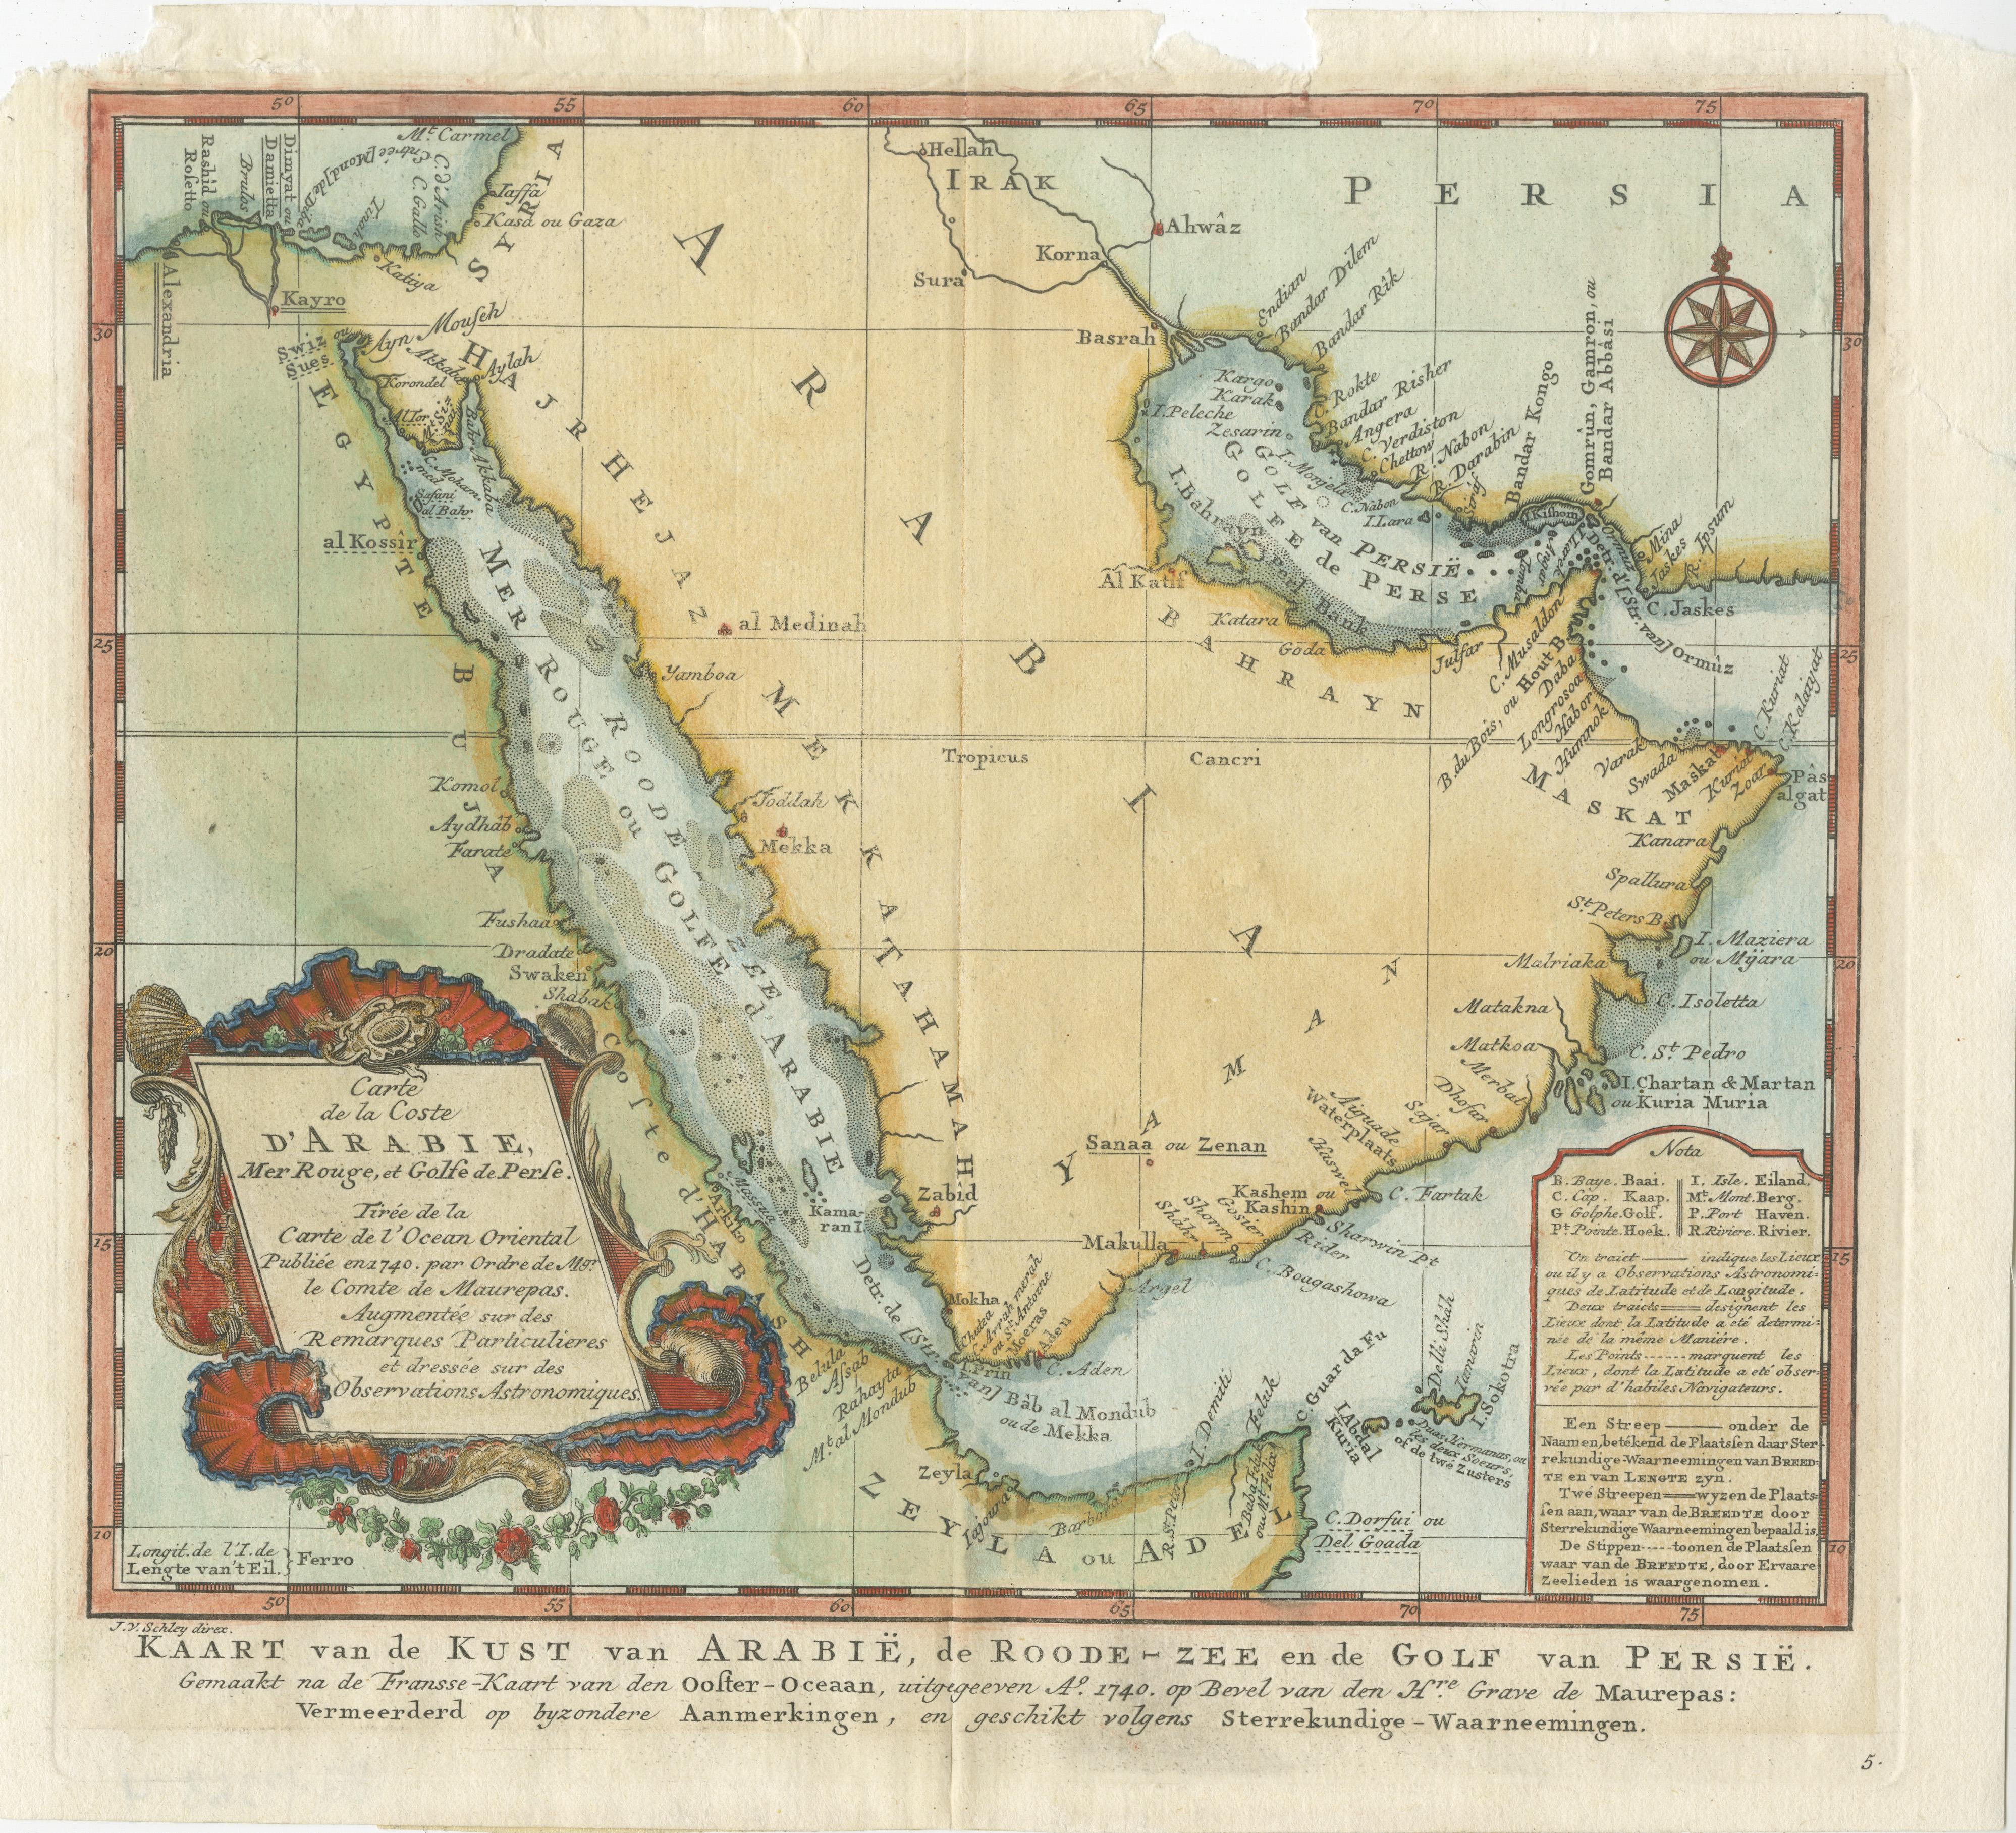 Antique map titled 'Carte de la Coste d'Arabie (..) - Kaart van de Kust van Arabië (..)'. This is a Dutch version, engraved by J. van Schley, of Bellin's map of Arabia and the Red Sea. The emphasis is the coastlines and the interior is primarily